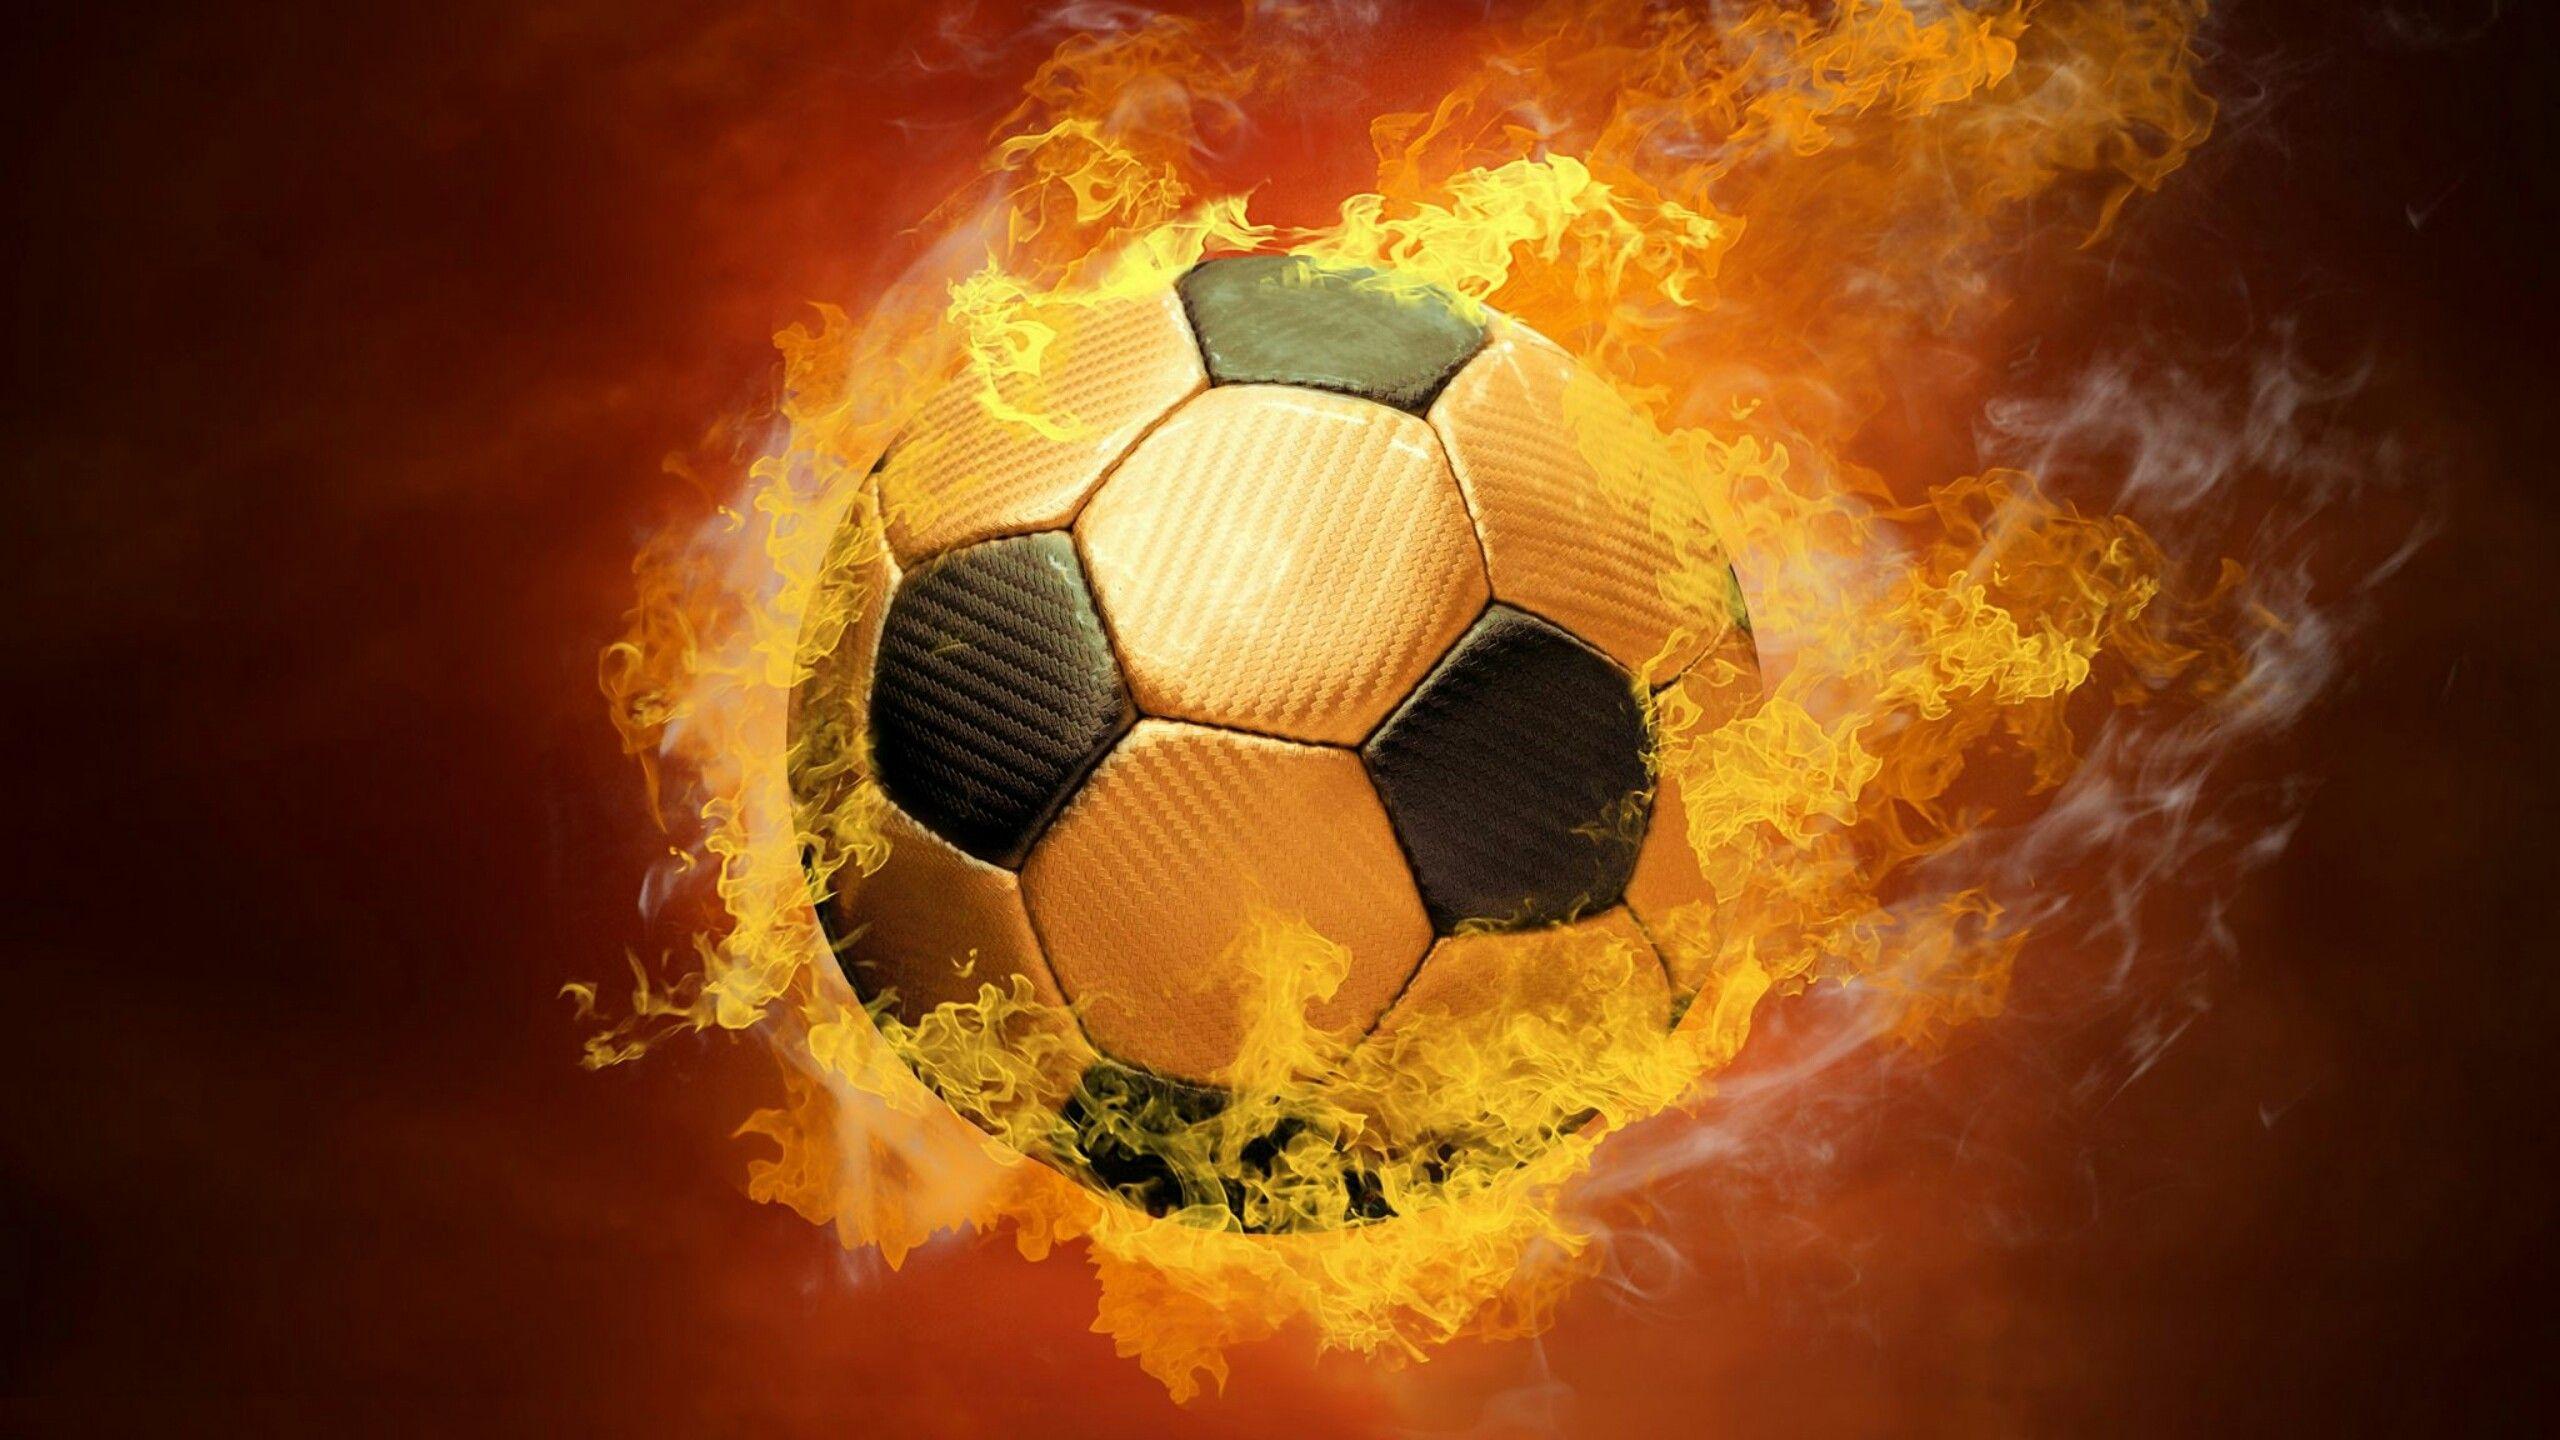 Ball On Fire Soccer Football Sports QHD Wallpaper 2560x1440